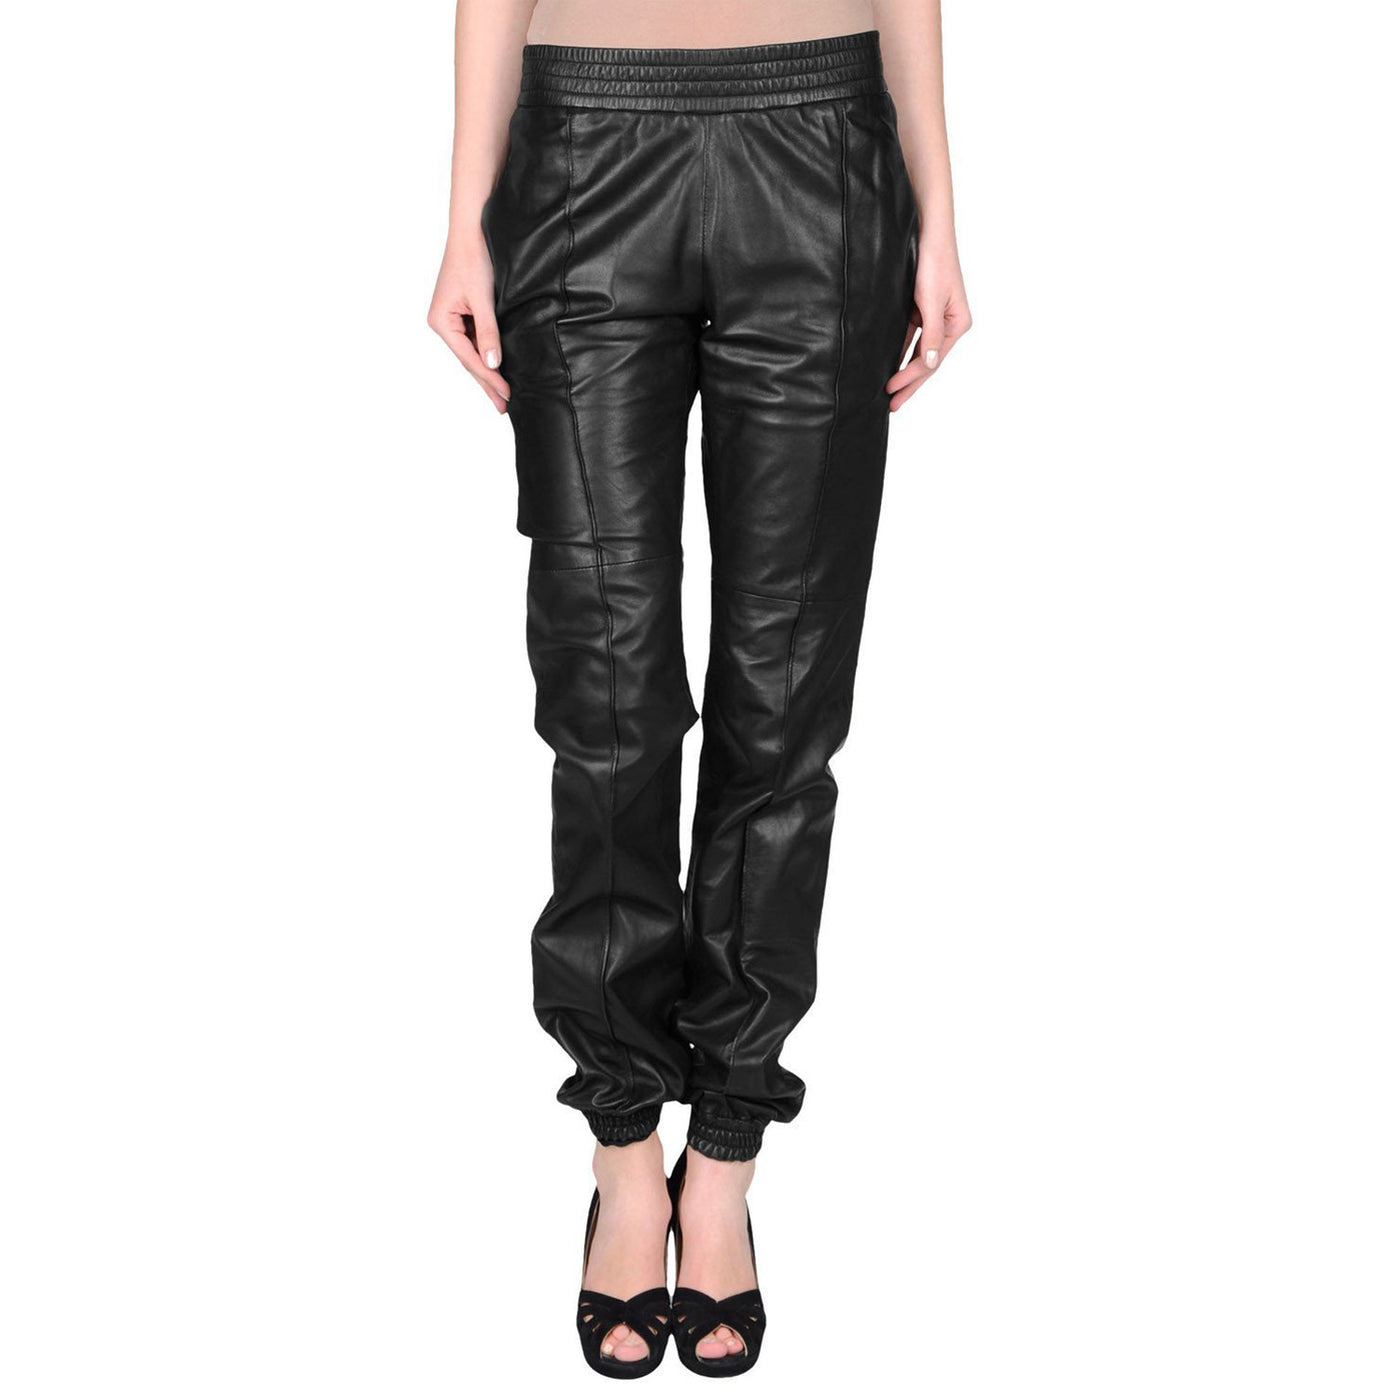 100% Real soft  Elastic Waist  Black leather pants 